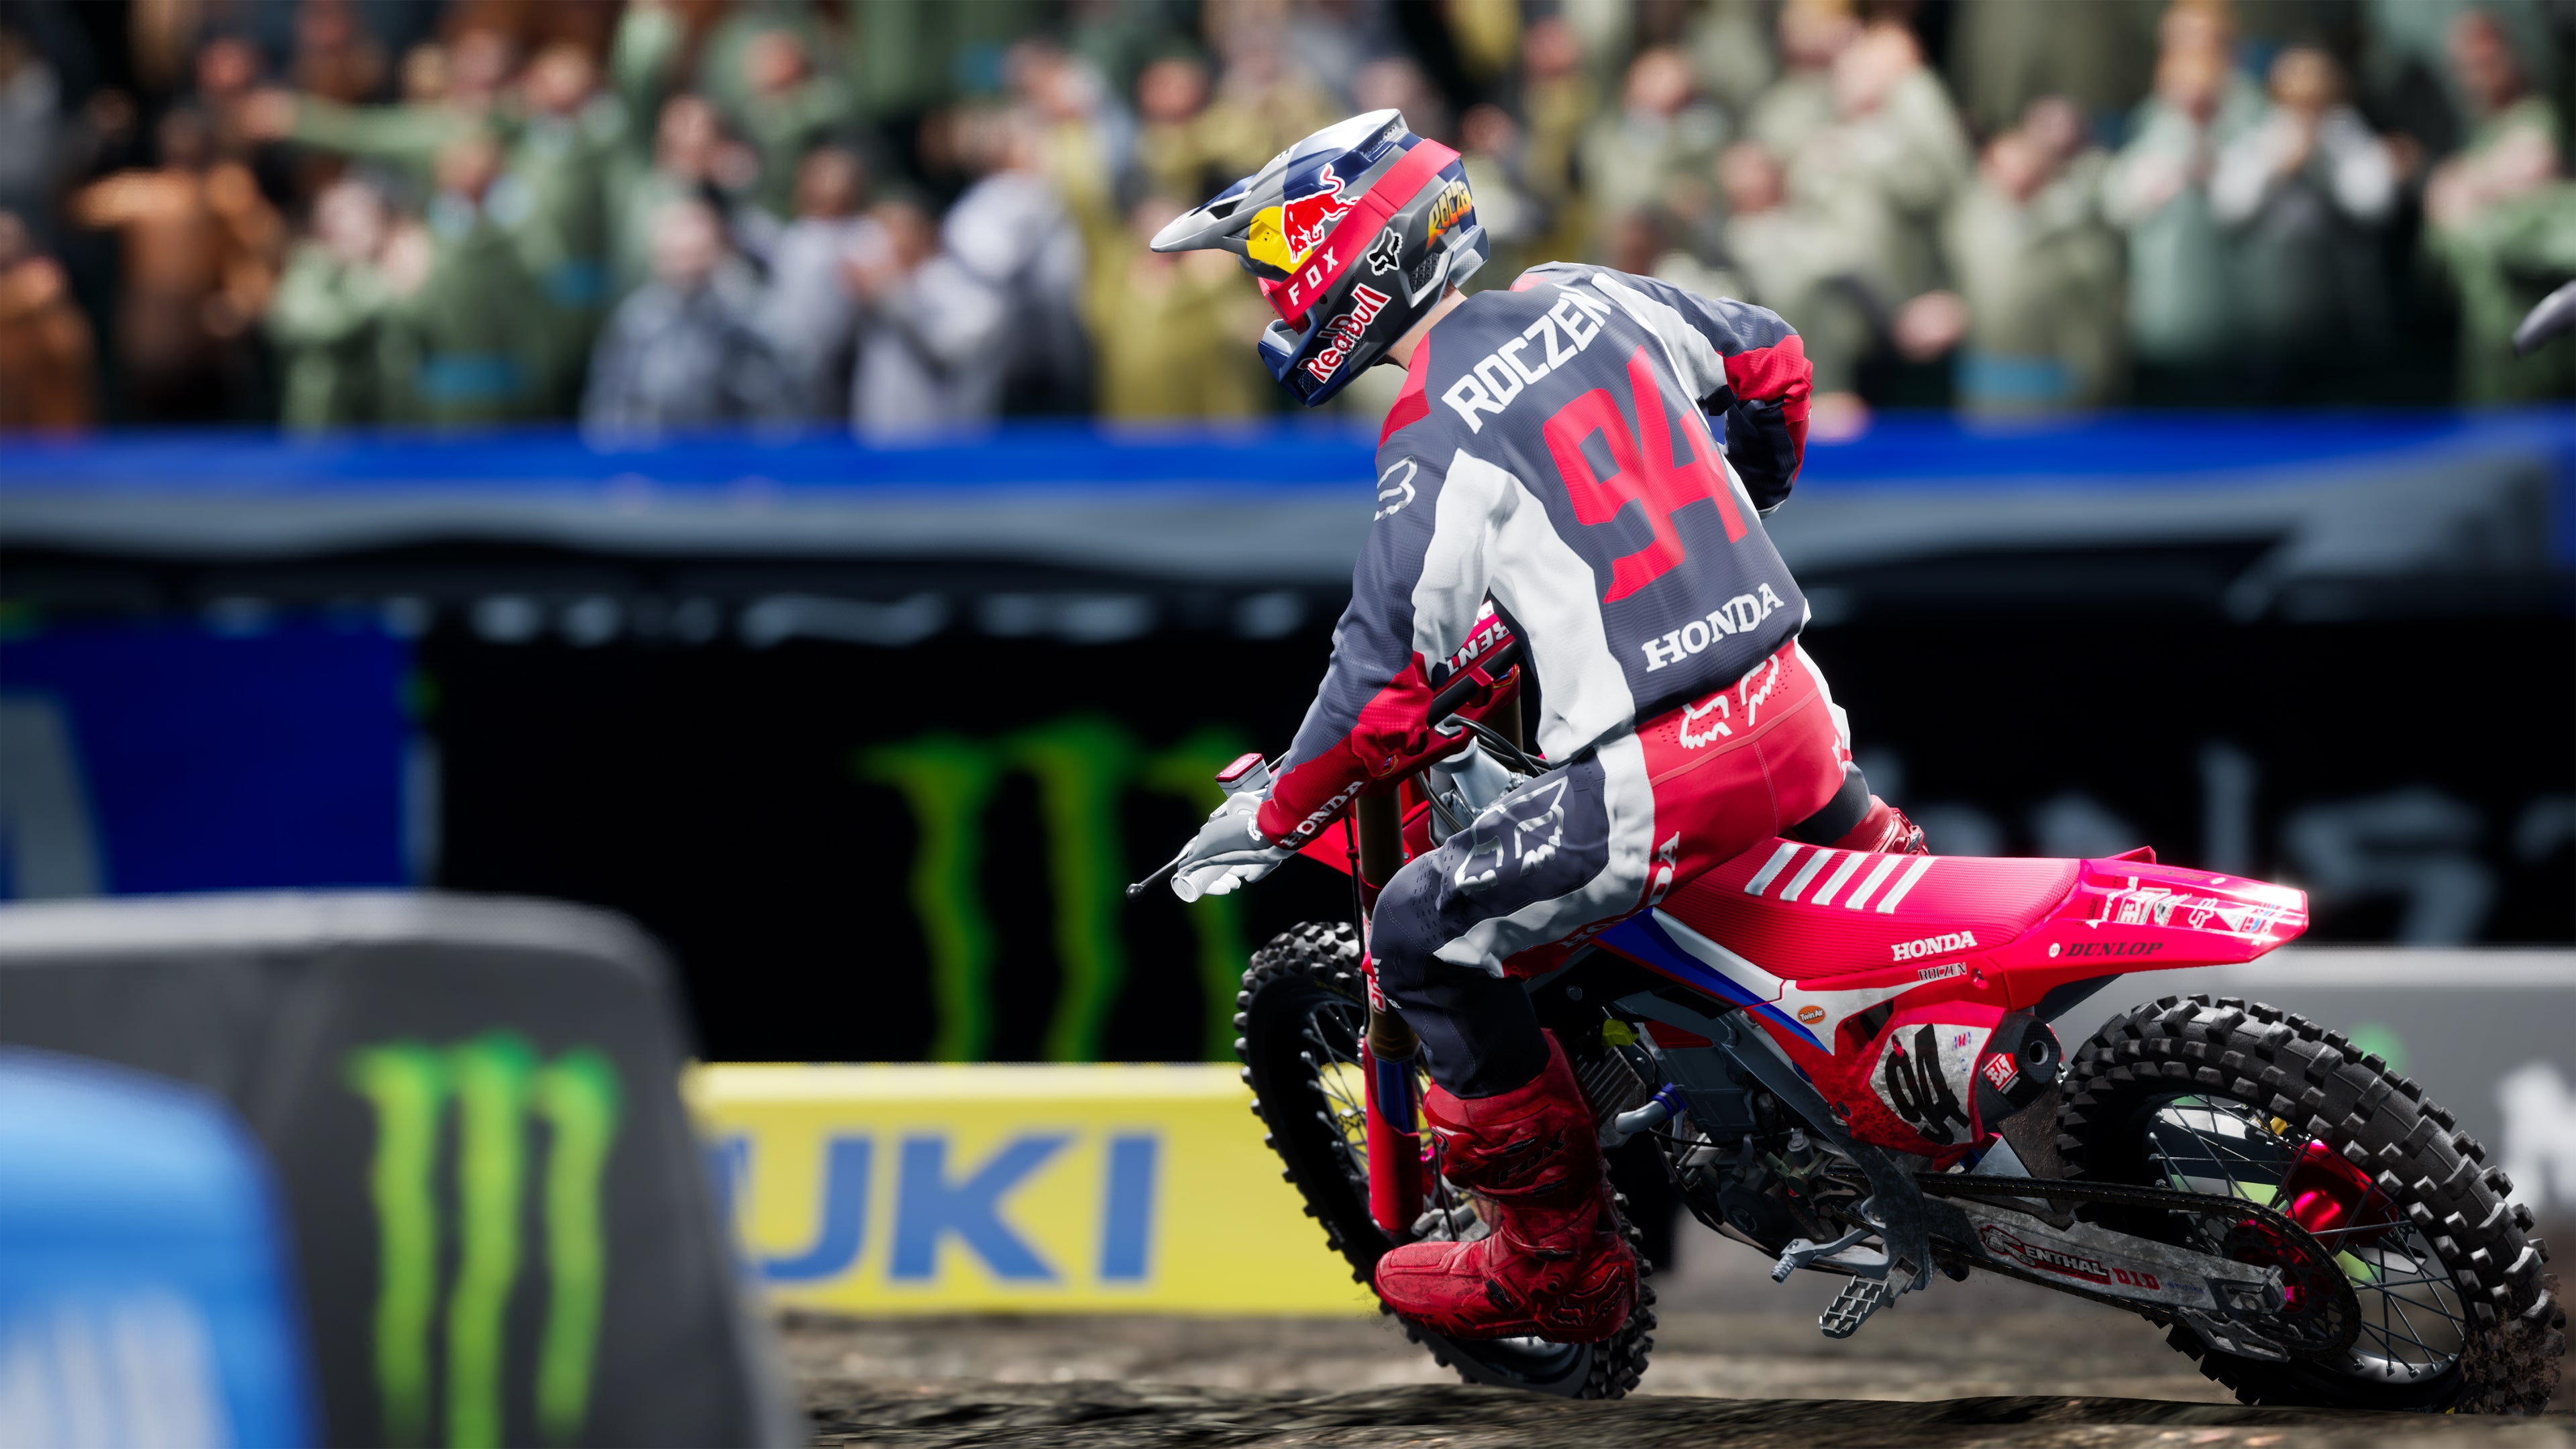 Jogo Monster Energy Supercross PS4 Motocross PS4 - Milestone - Jogos de  Corrida e Voo - Magazine Luiza